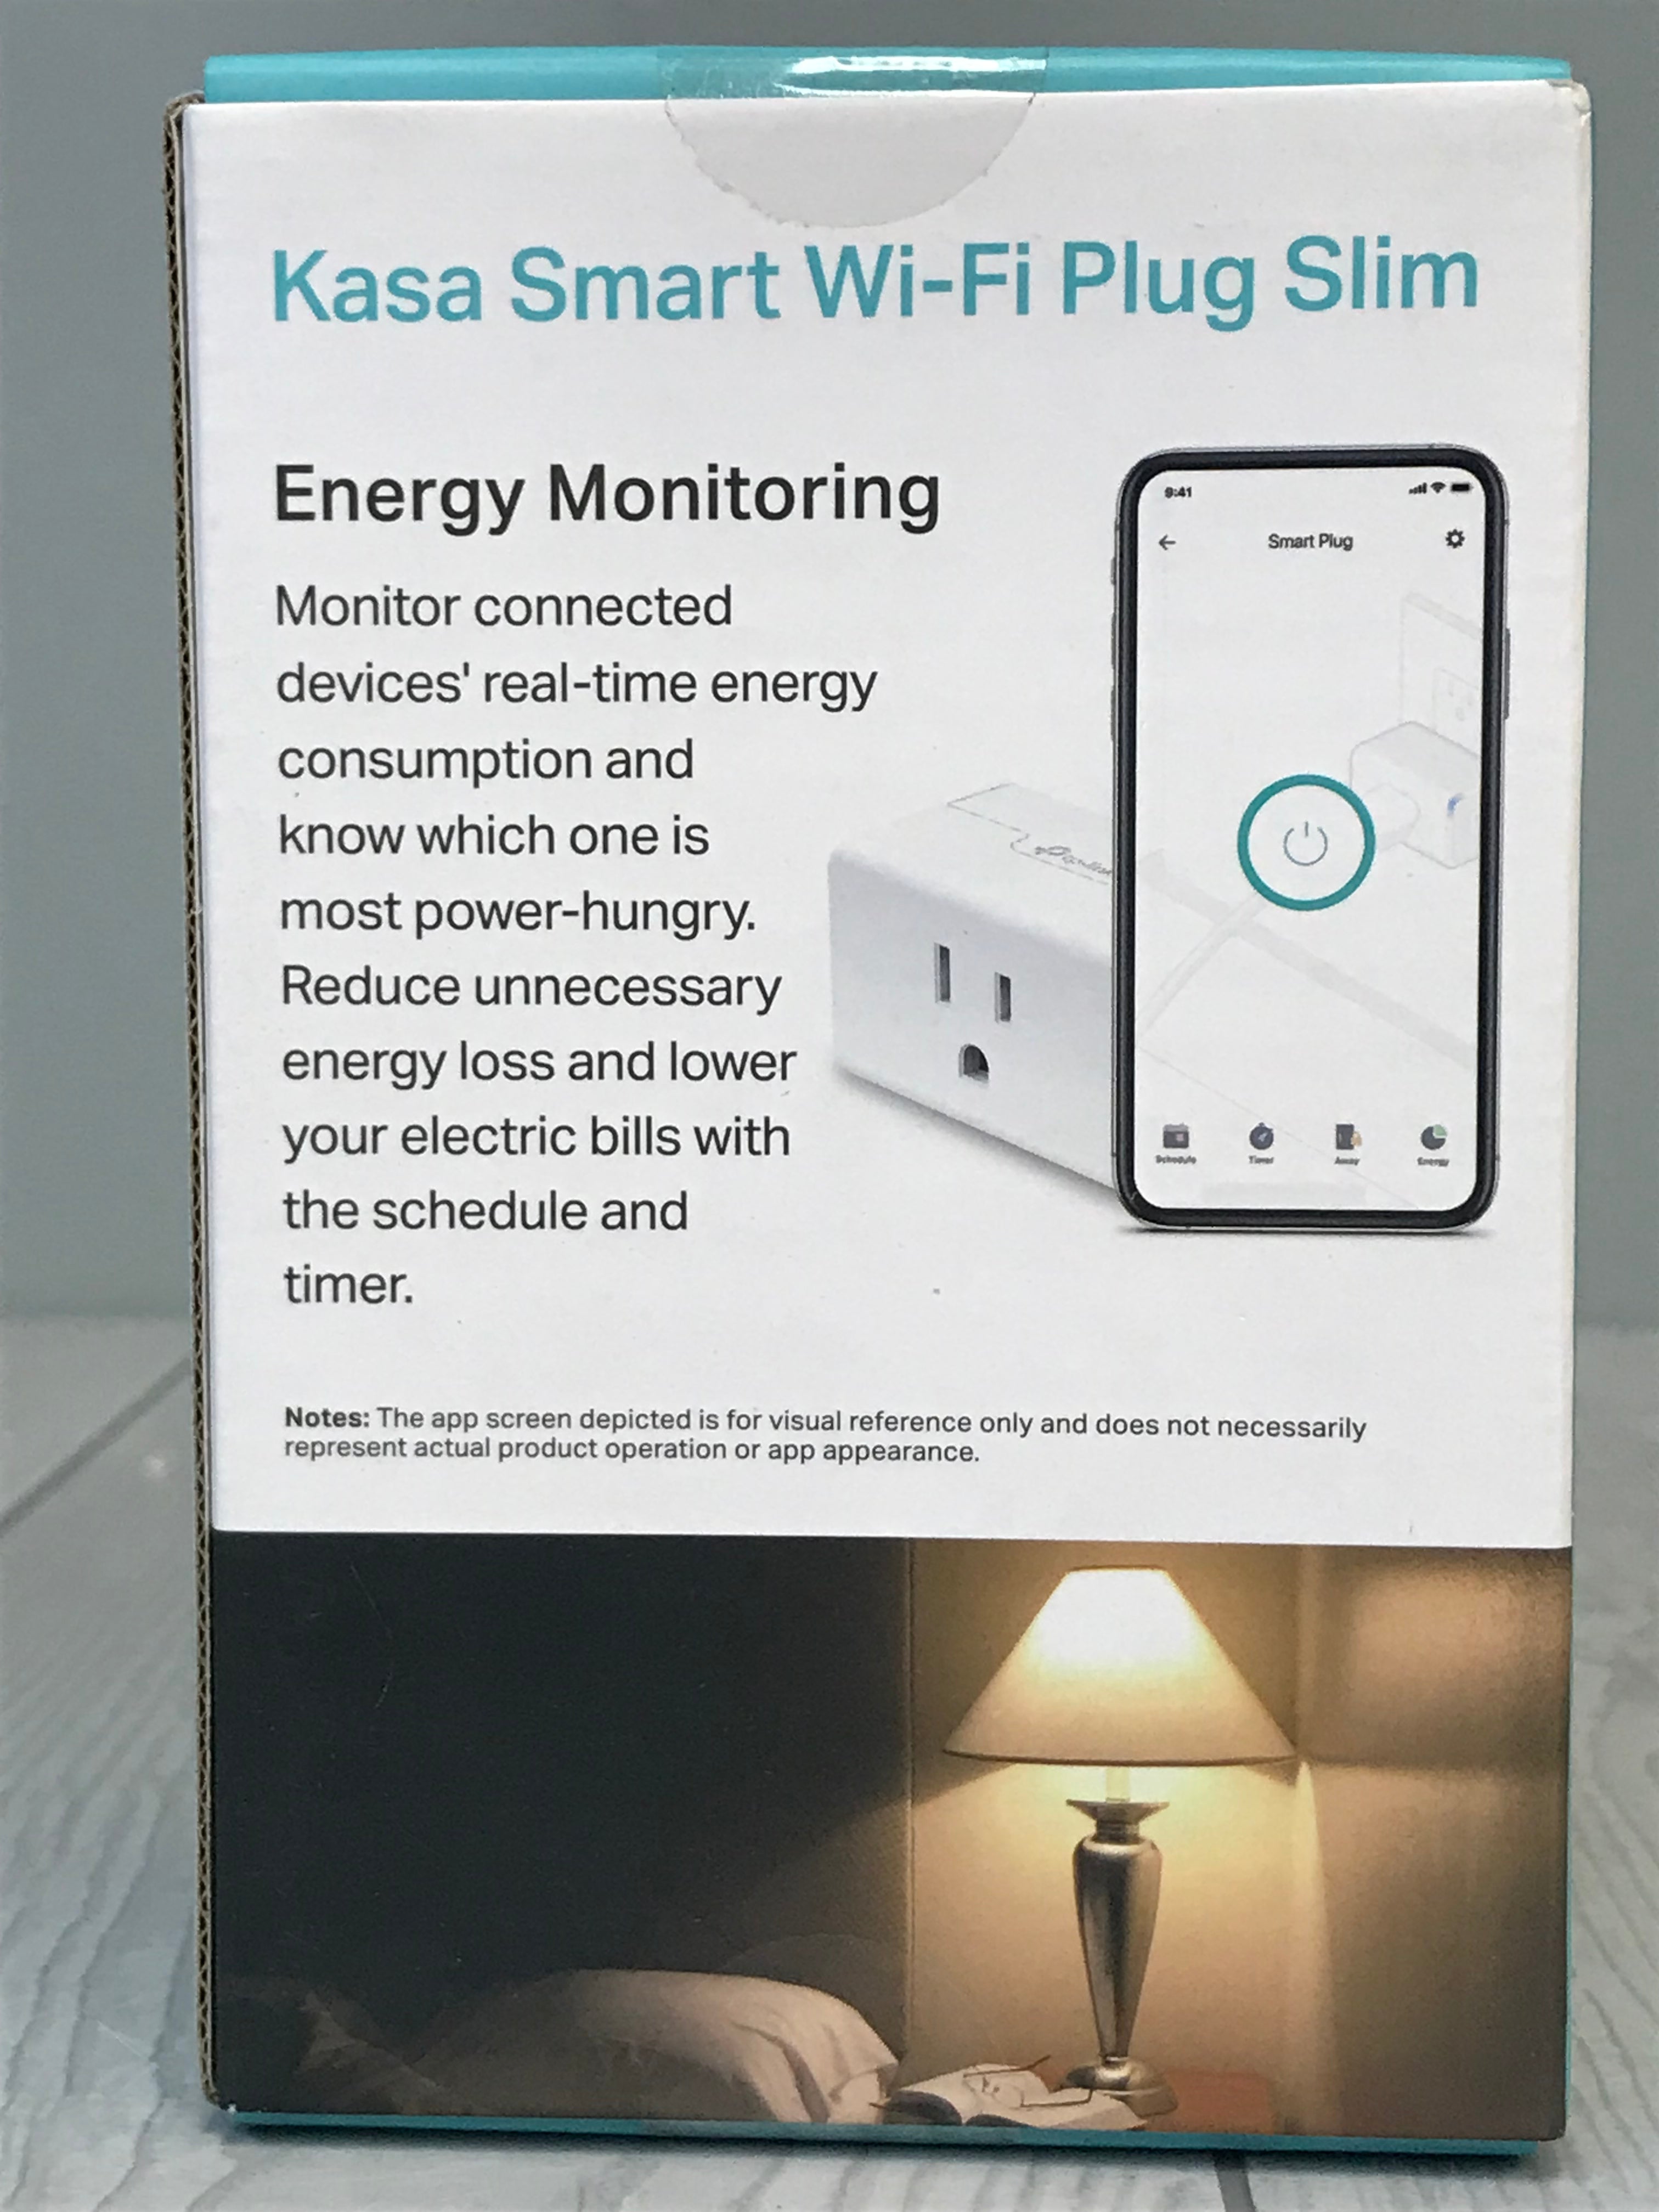 TP-Link/Kasa Smart Wi-Fi Plug Slim with Energy Monitoring Model #KP115